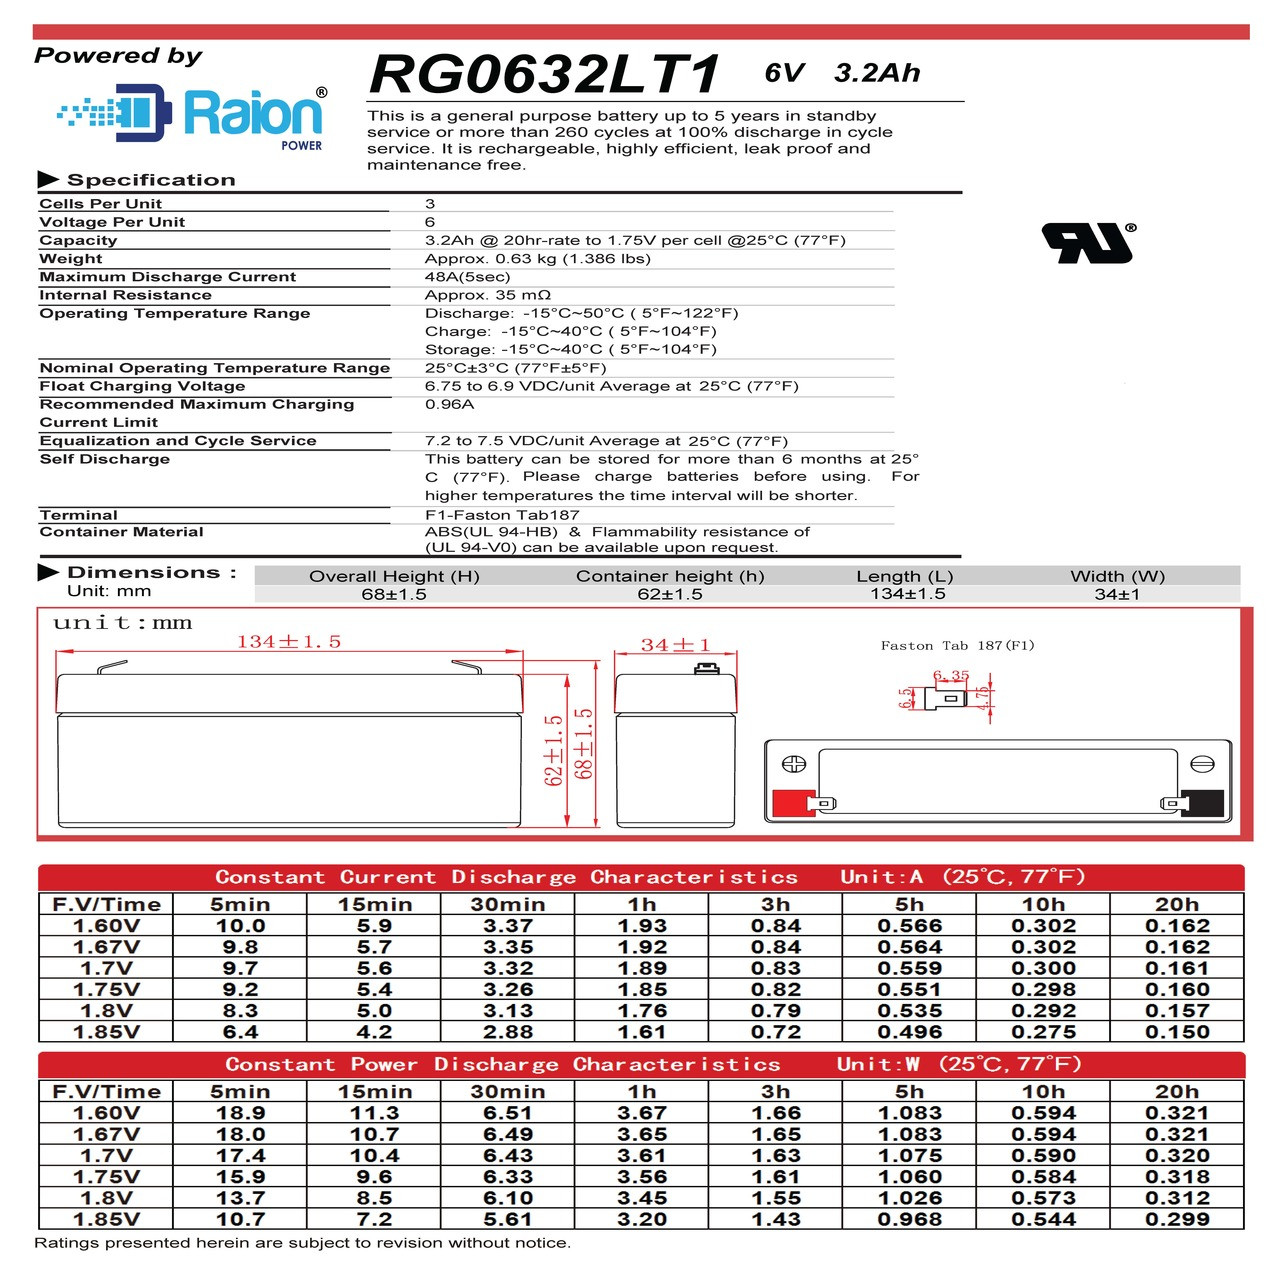 Raion Power RG0632LT1 6V 3.2Ah Battery Data Sheet for Seward Medical 9911 E.C.G.